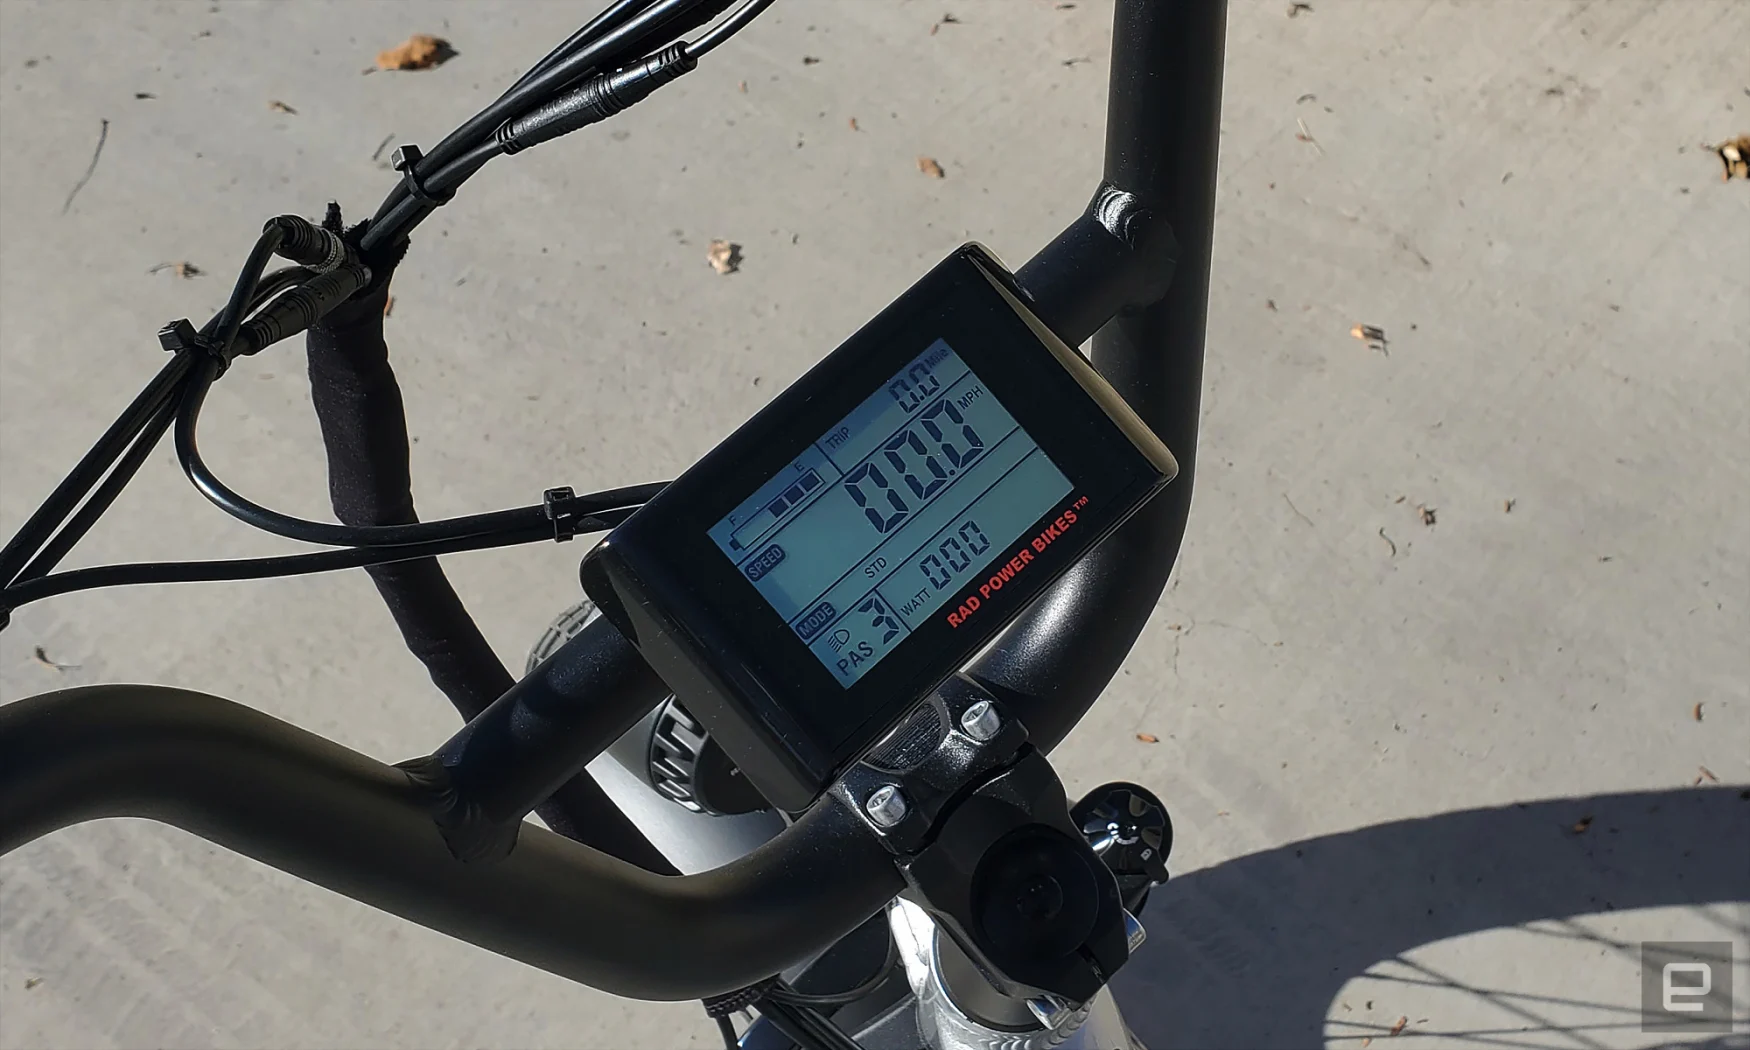 Radpower bike rider plus LED screen